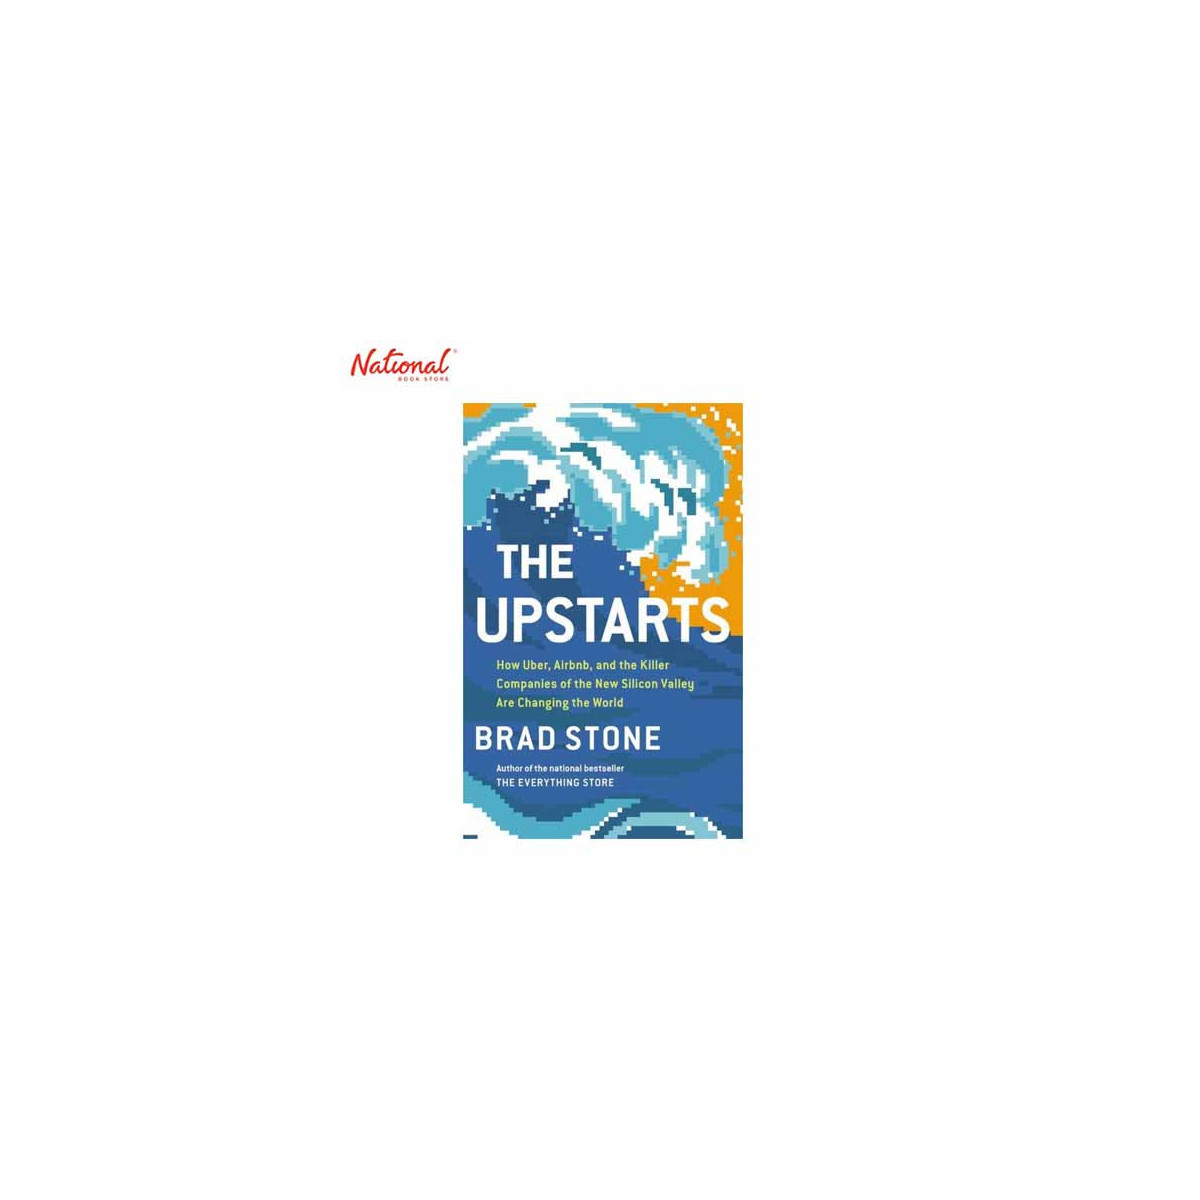 The Upstarts Trade Paperback by Brad Stone